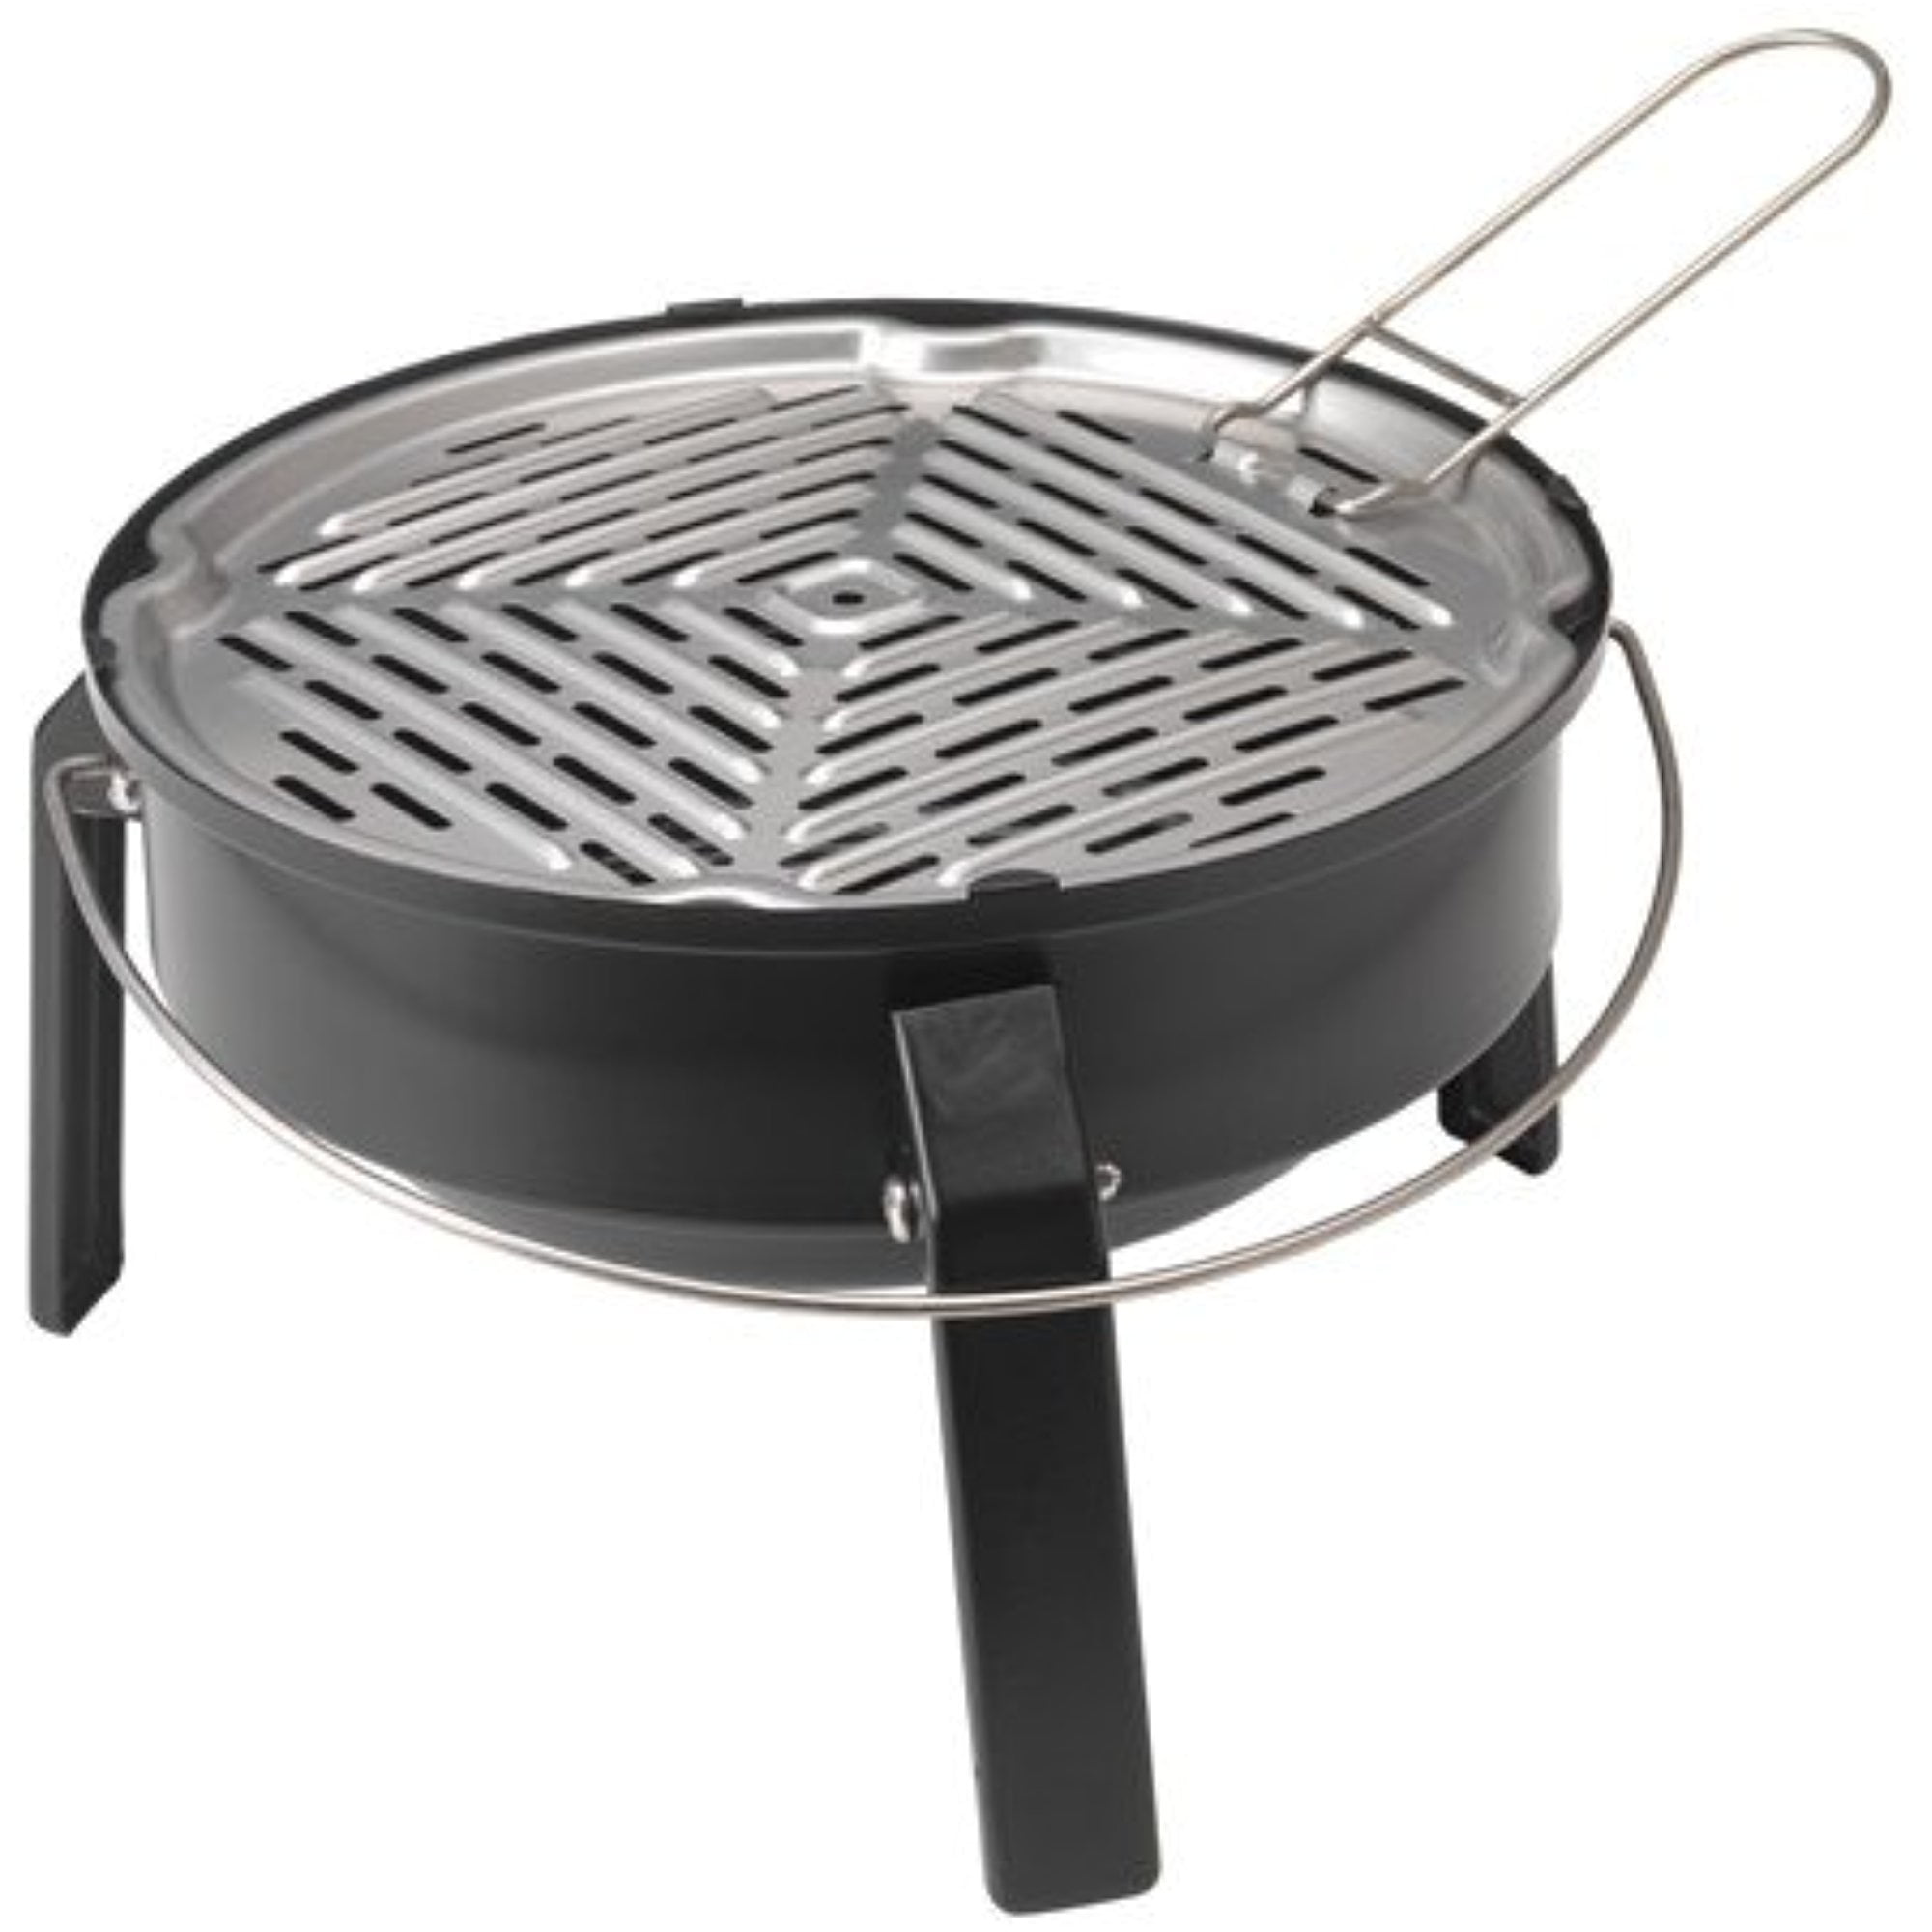 Portable charcoal grill, blac Walmart.com